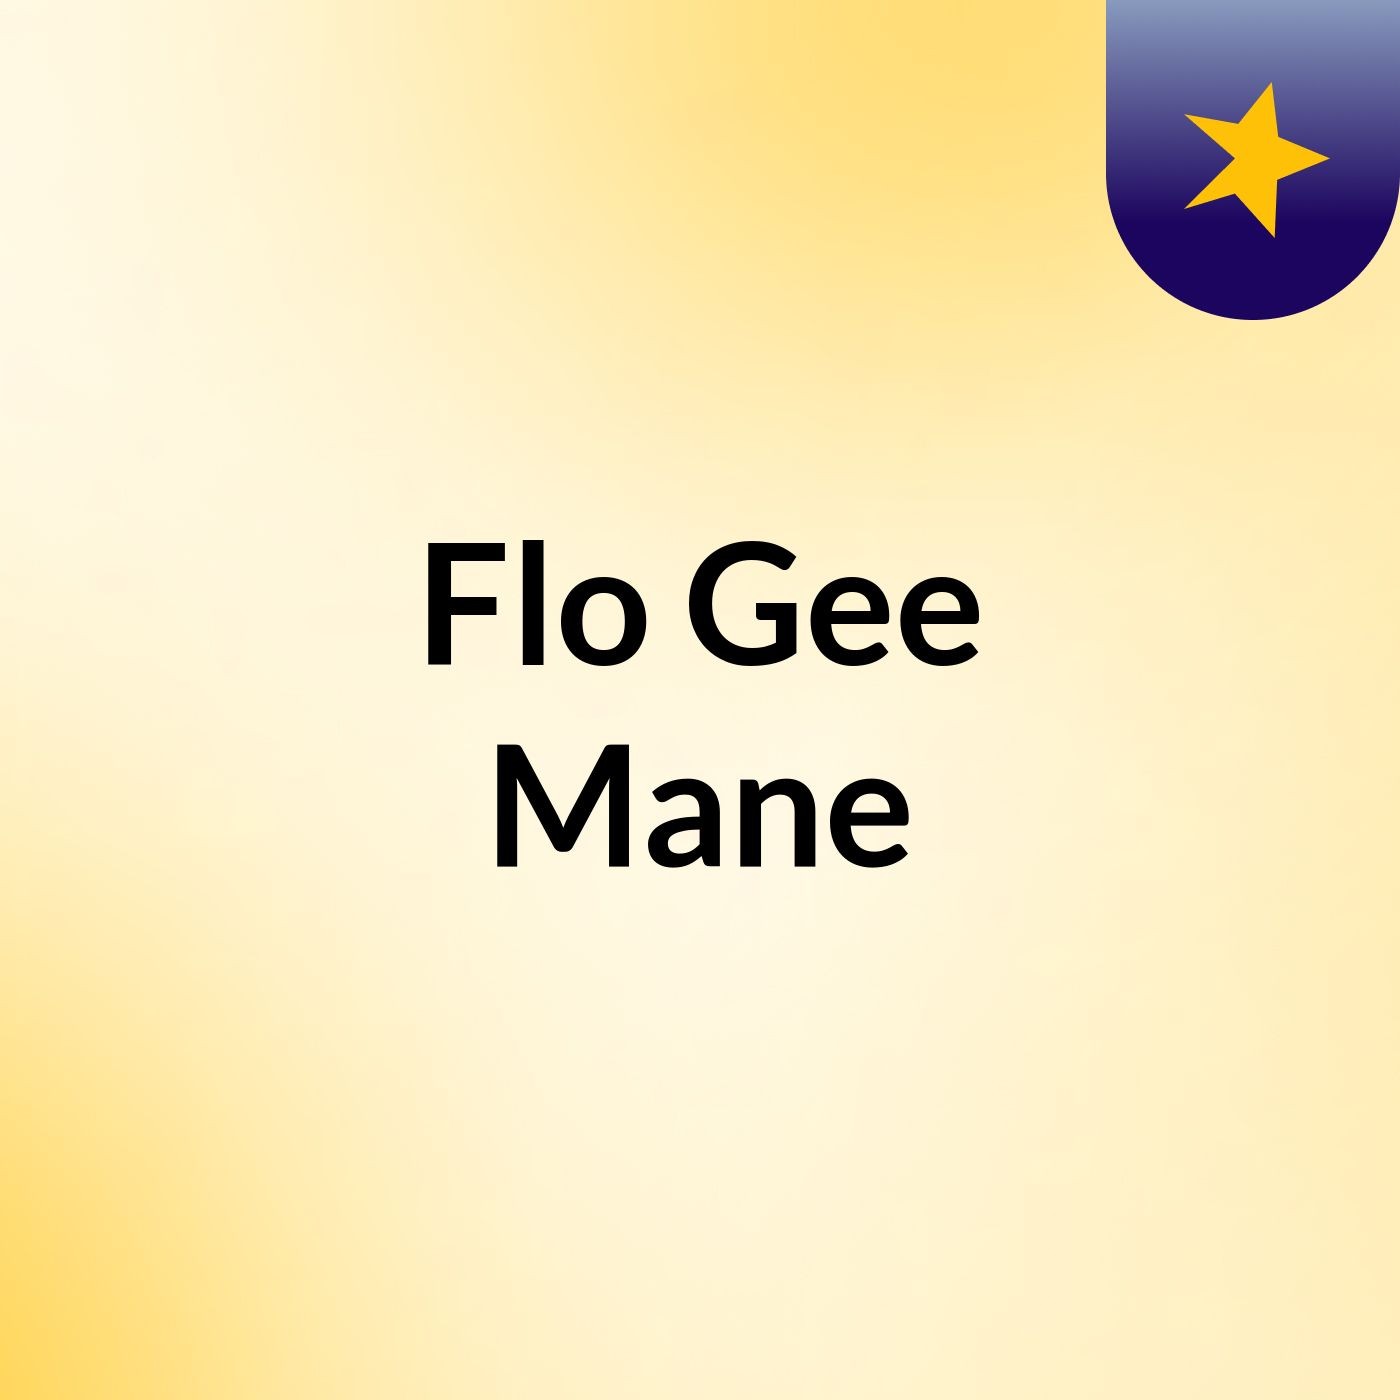 Flo Gee Mane